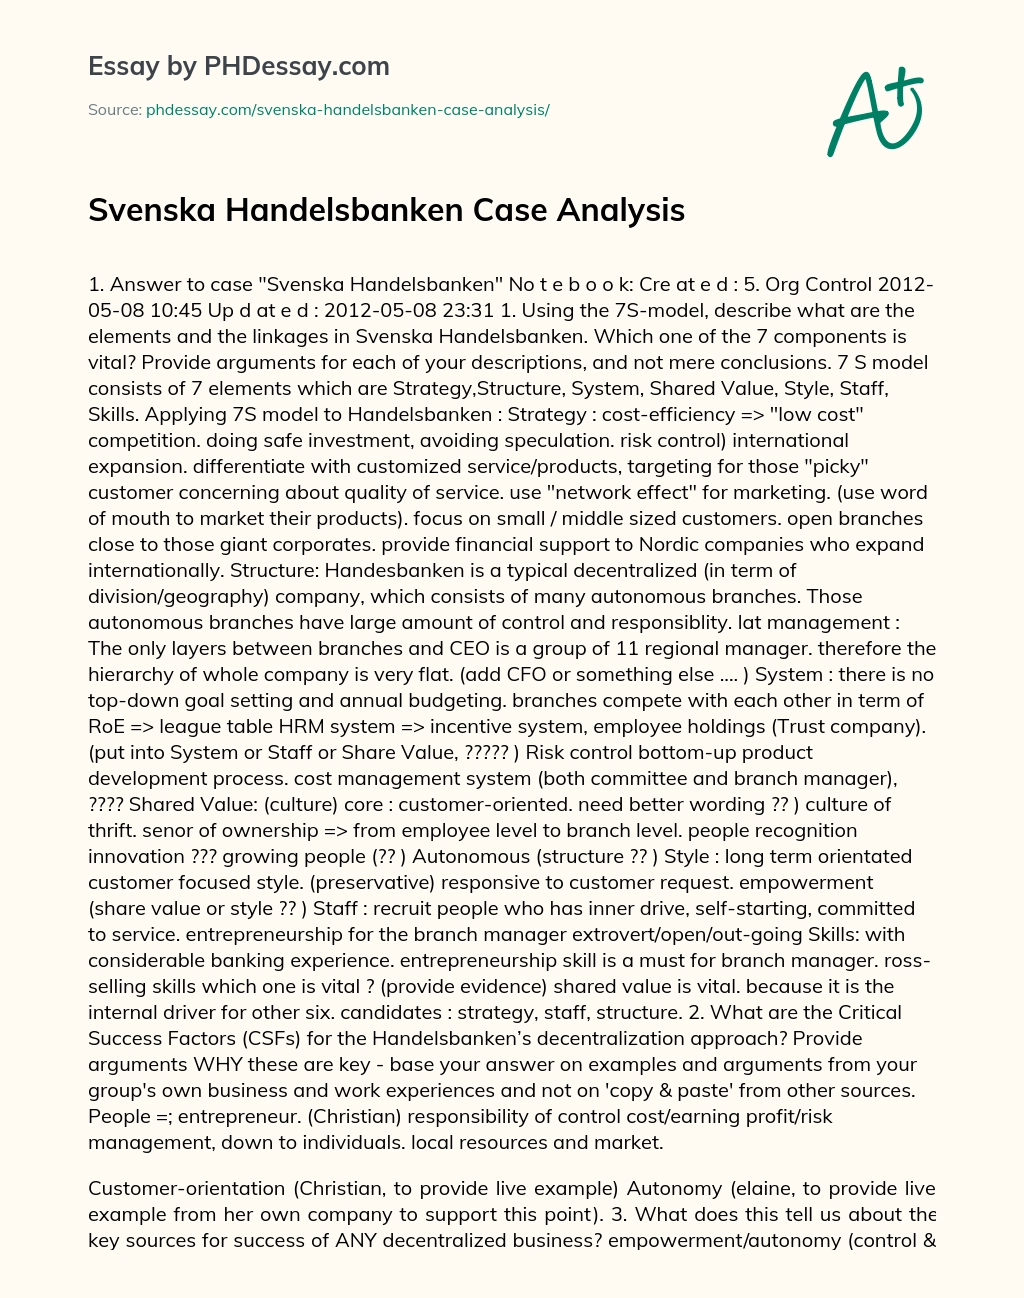 Svenska Handelsbanken Case Analysis essay